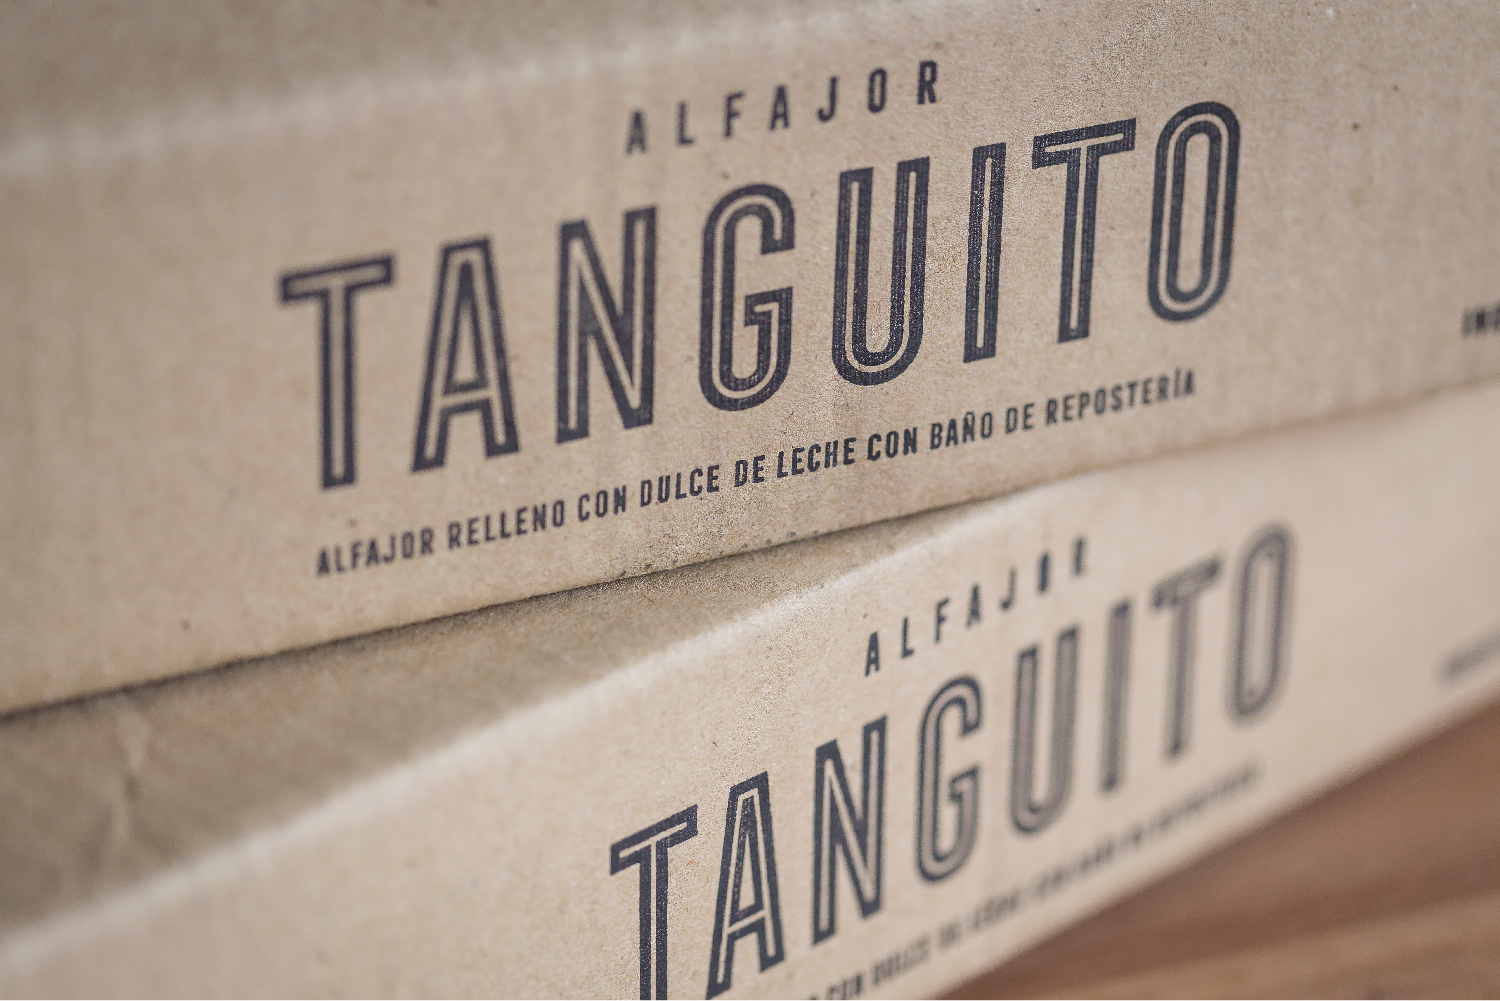 Alfajor Tanguito Box